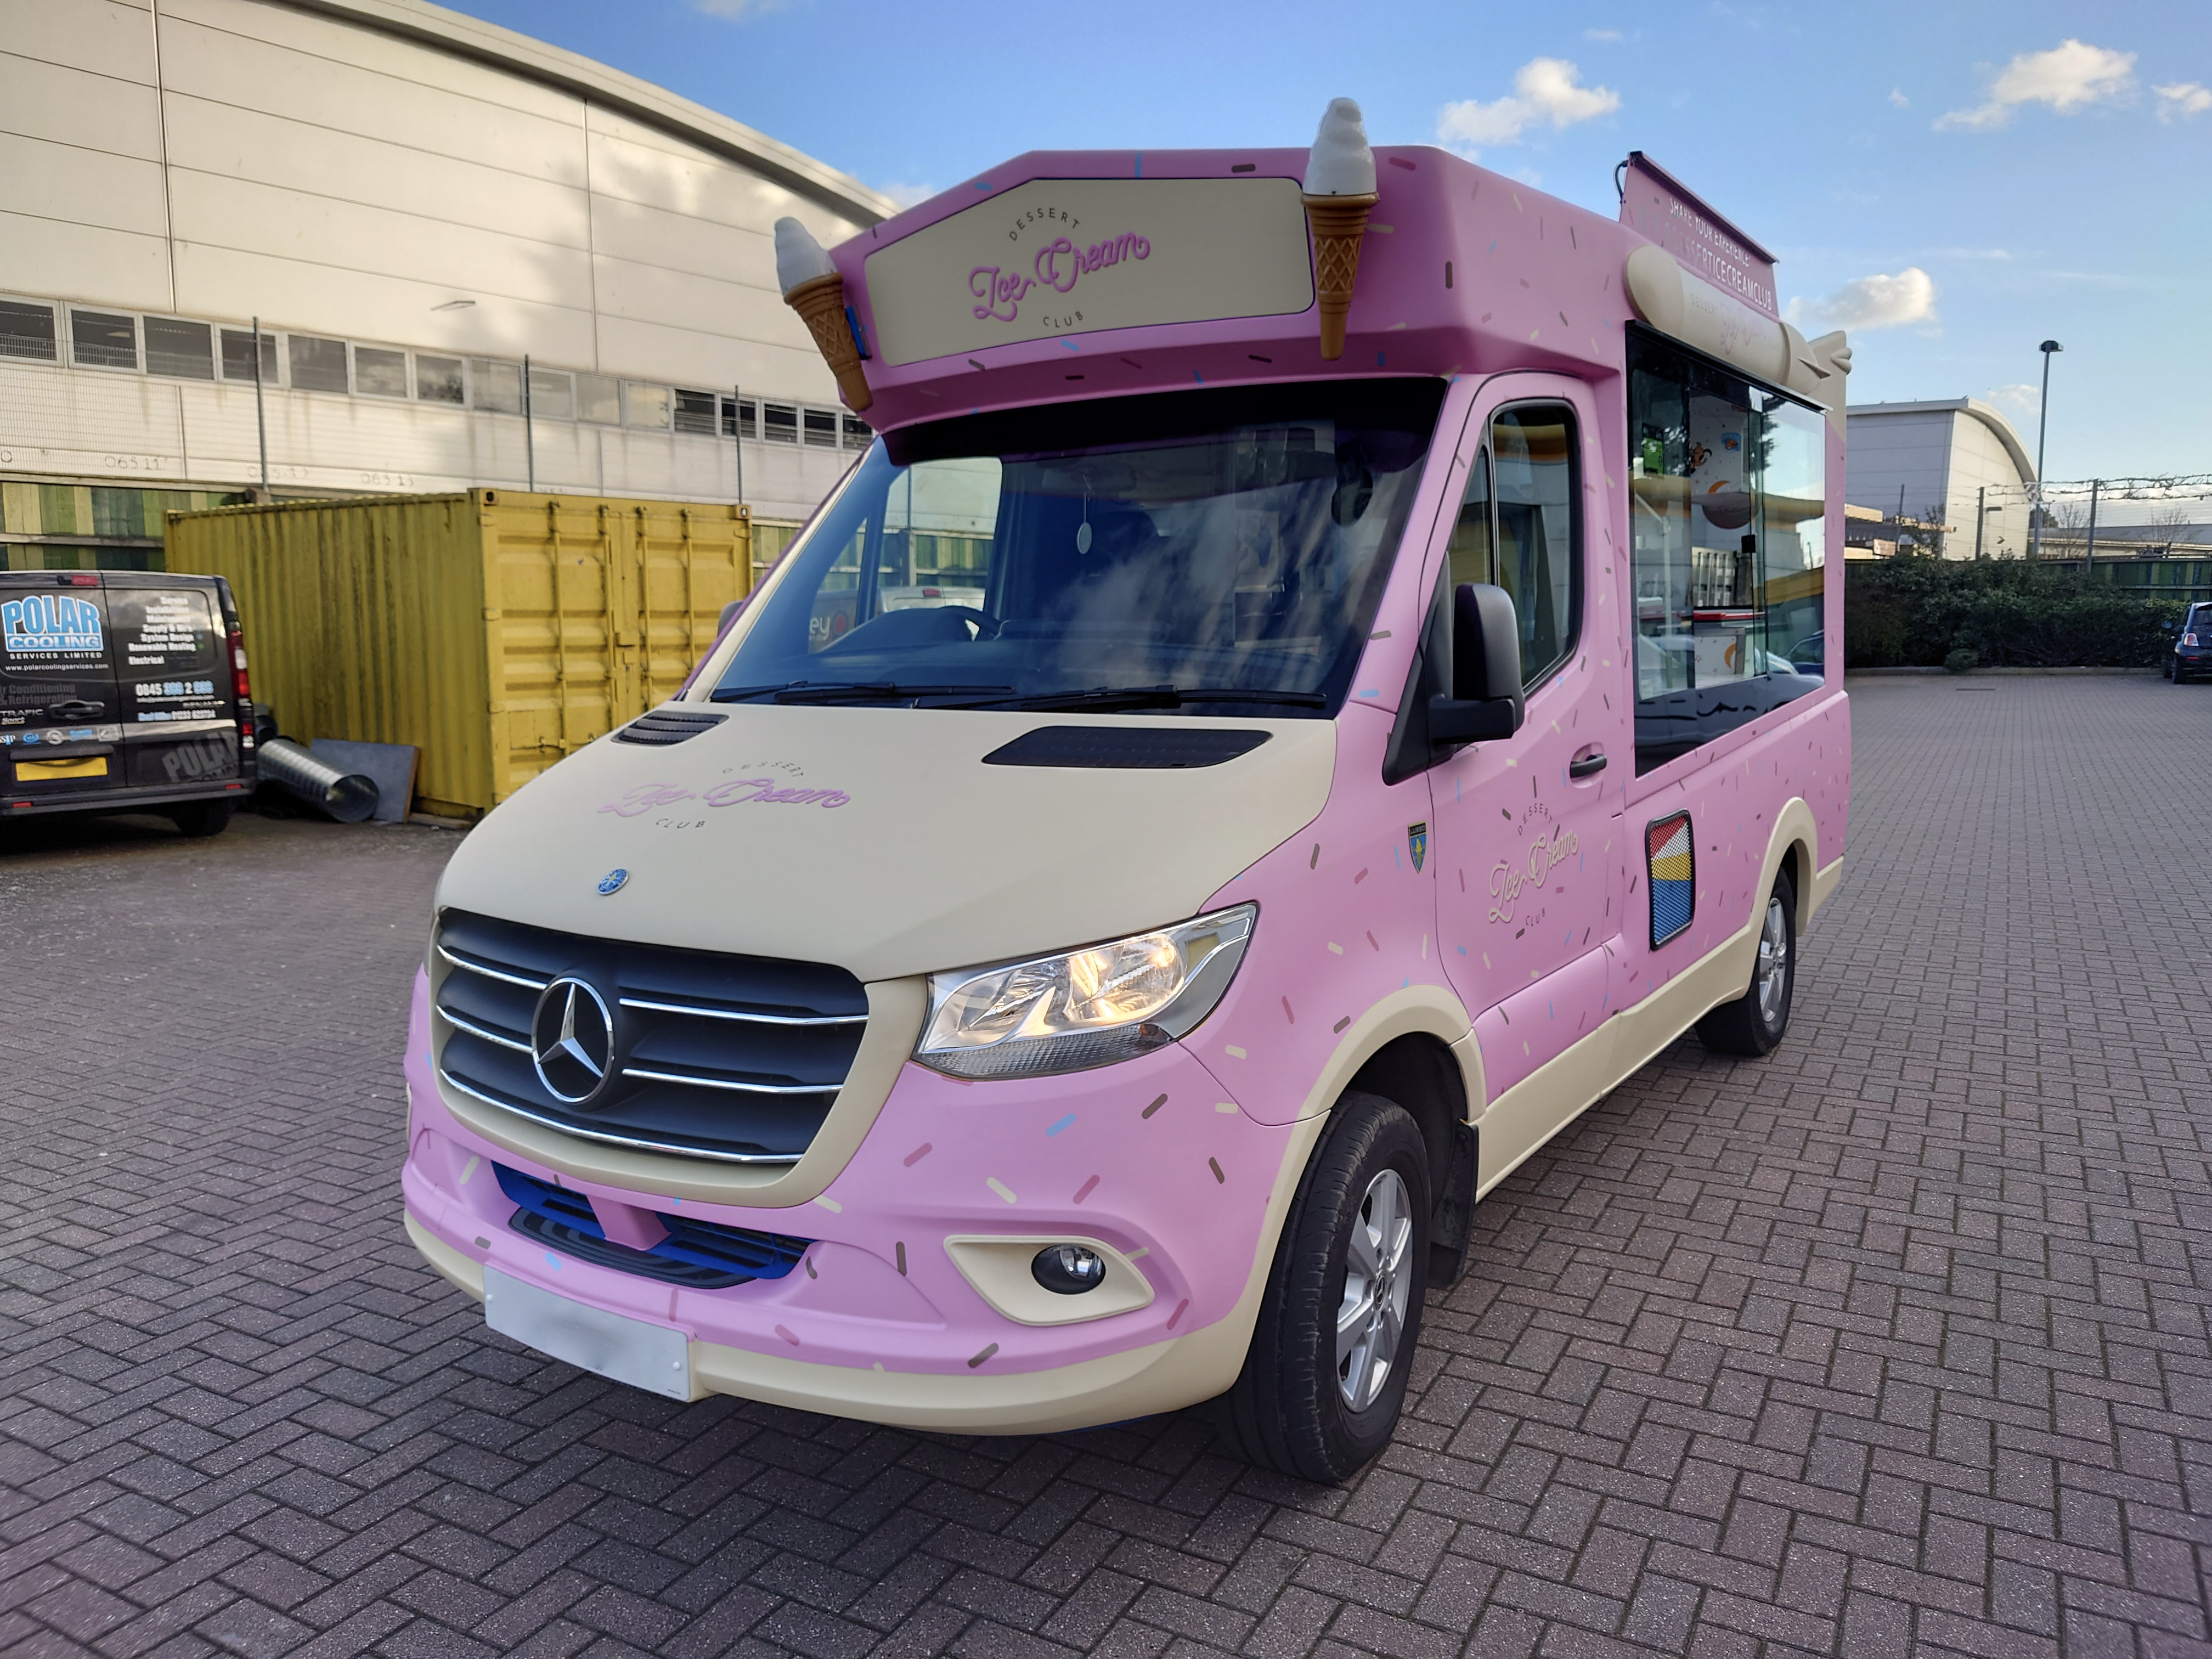 Mercedes-Benz Ice Cream van van wrap car wrap ashford wrapping